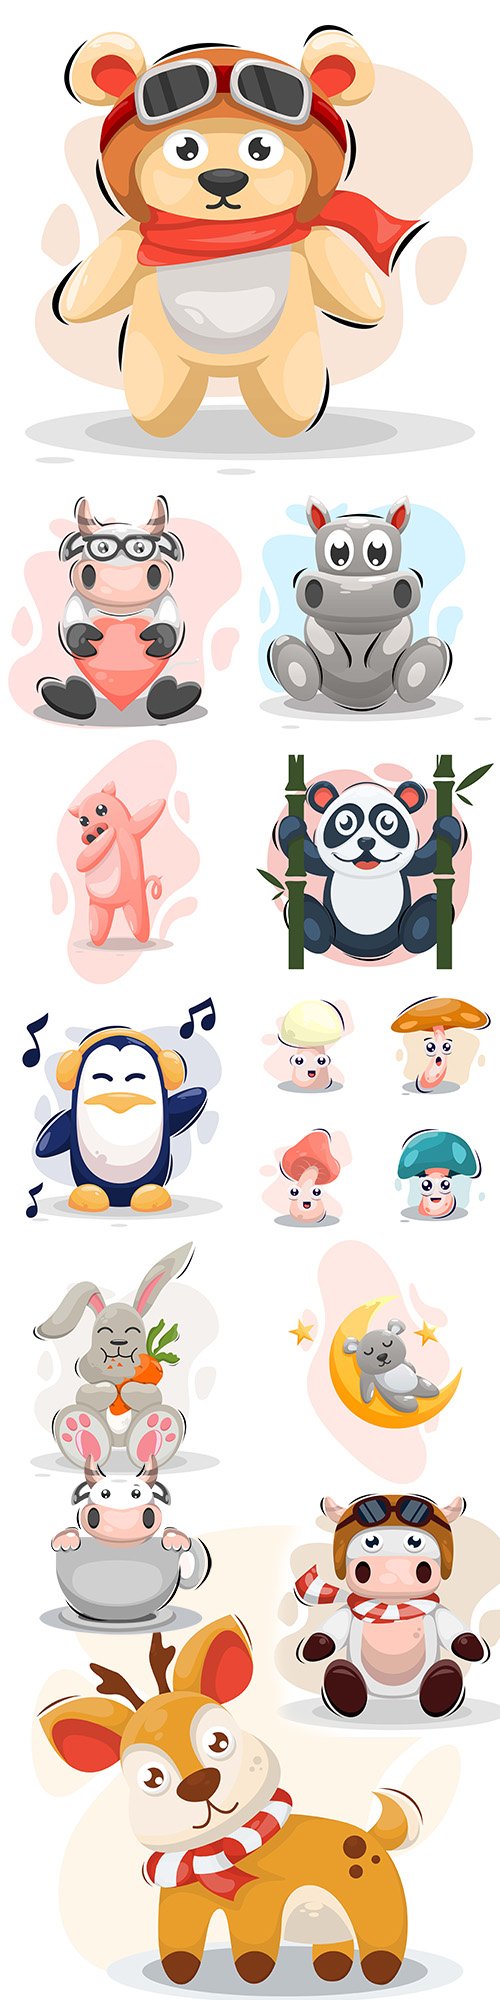 Cute little animal illustrations cartoon mascot